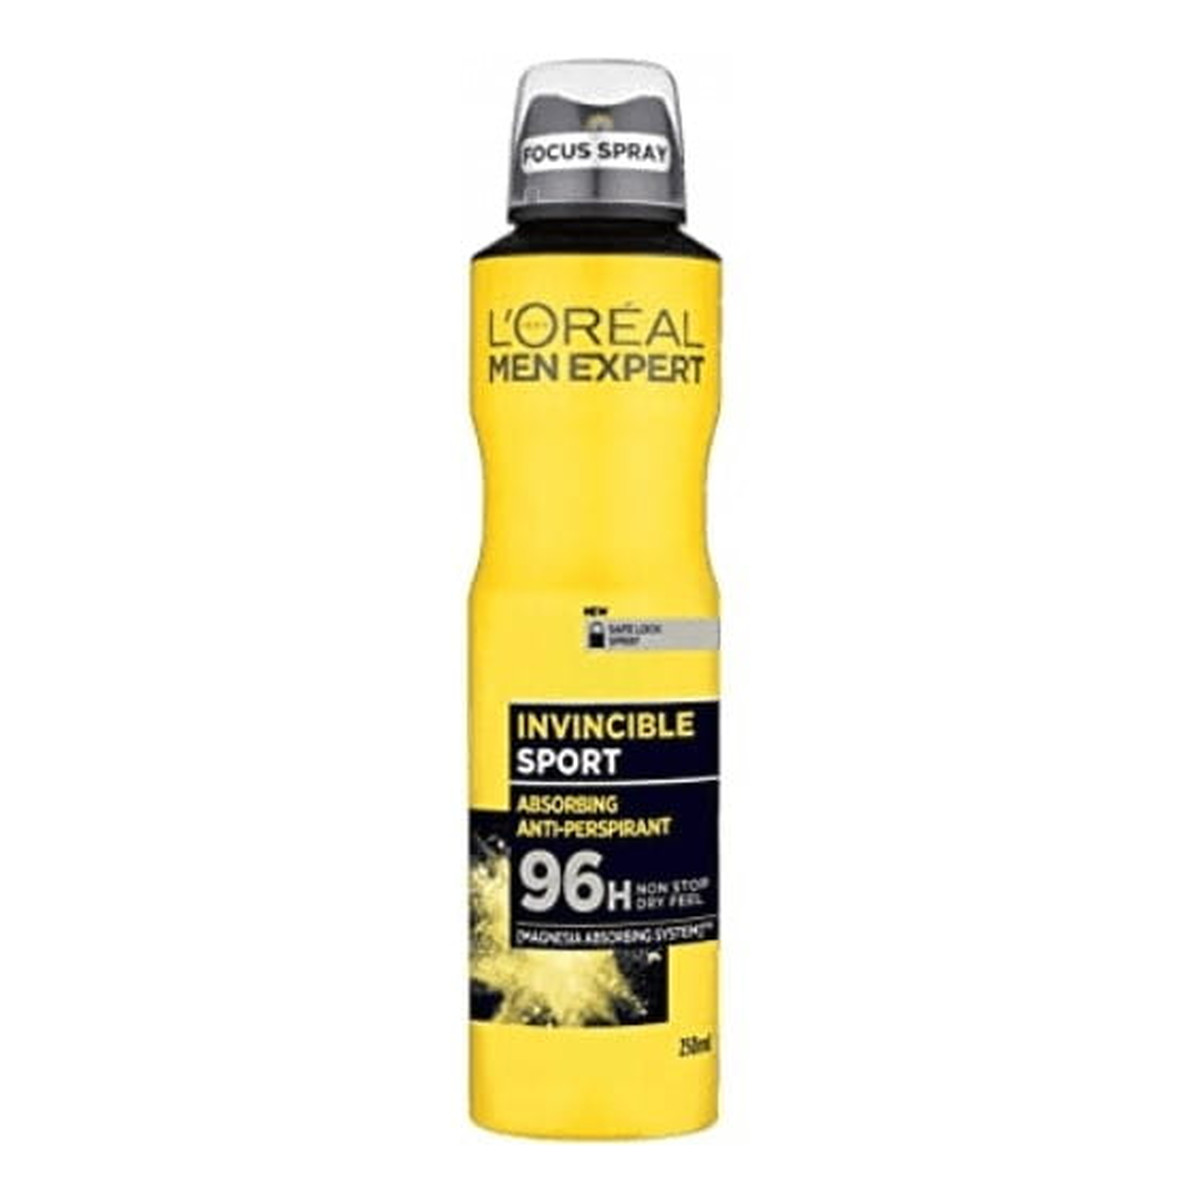 L'Oreal Paris Men Expert dezodorant spray Invincible Sport 96h 150ml